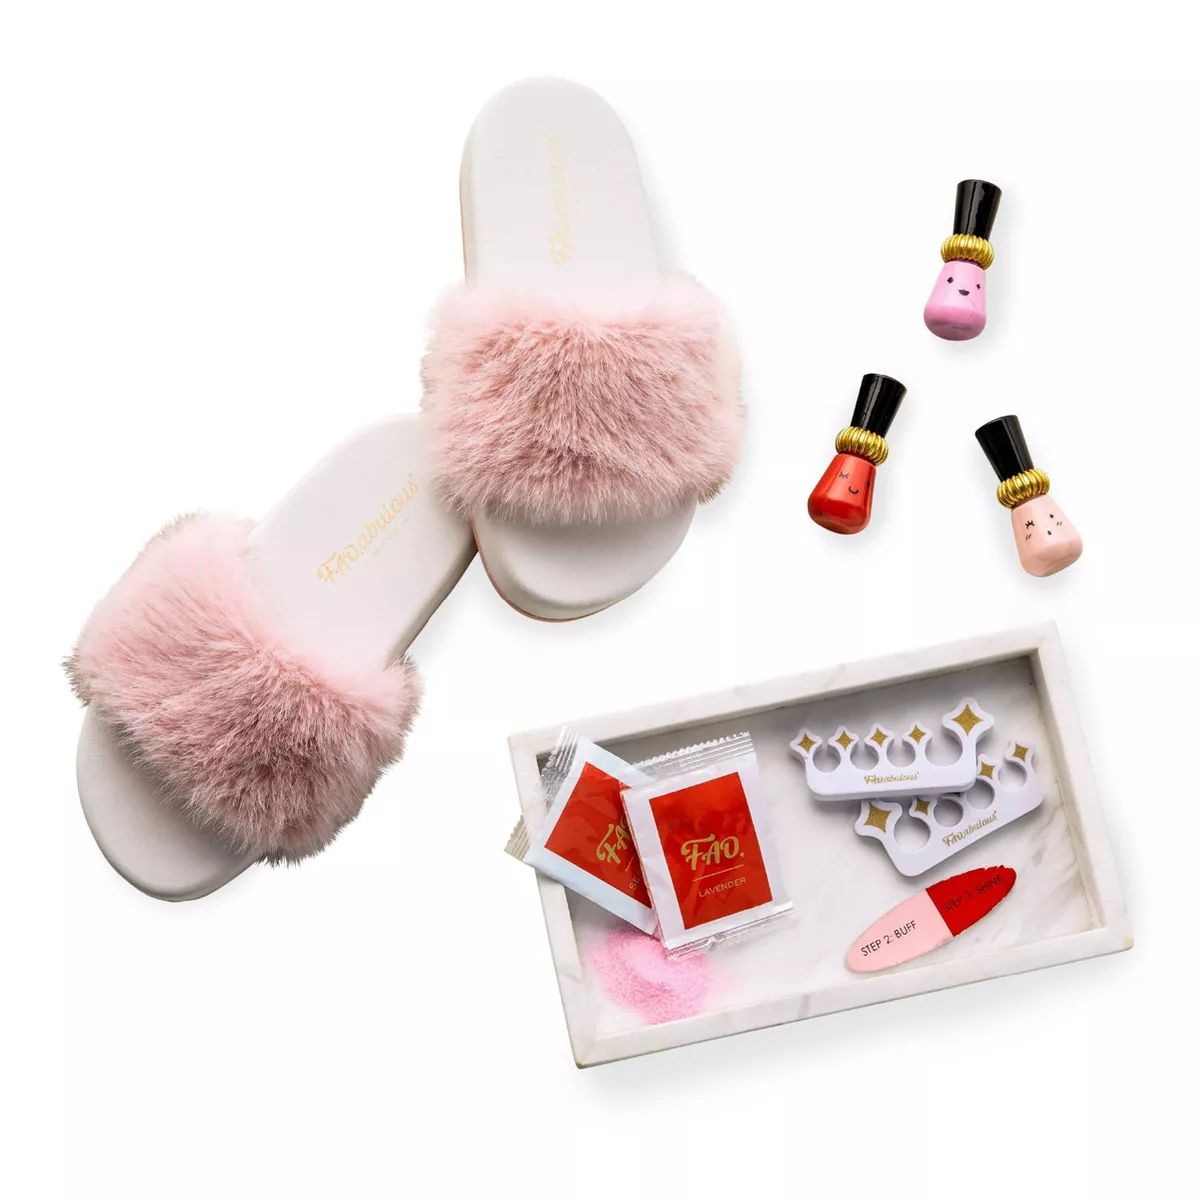 FAO Schwarz Slippers Pedicure Gift Set | Target